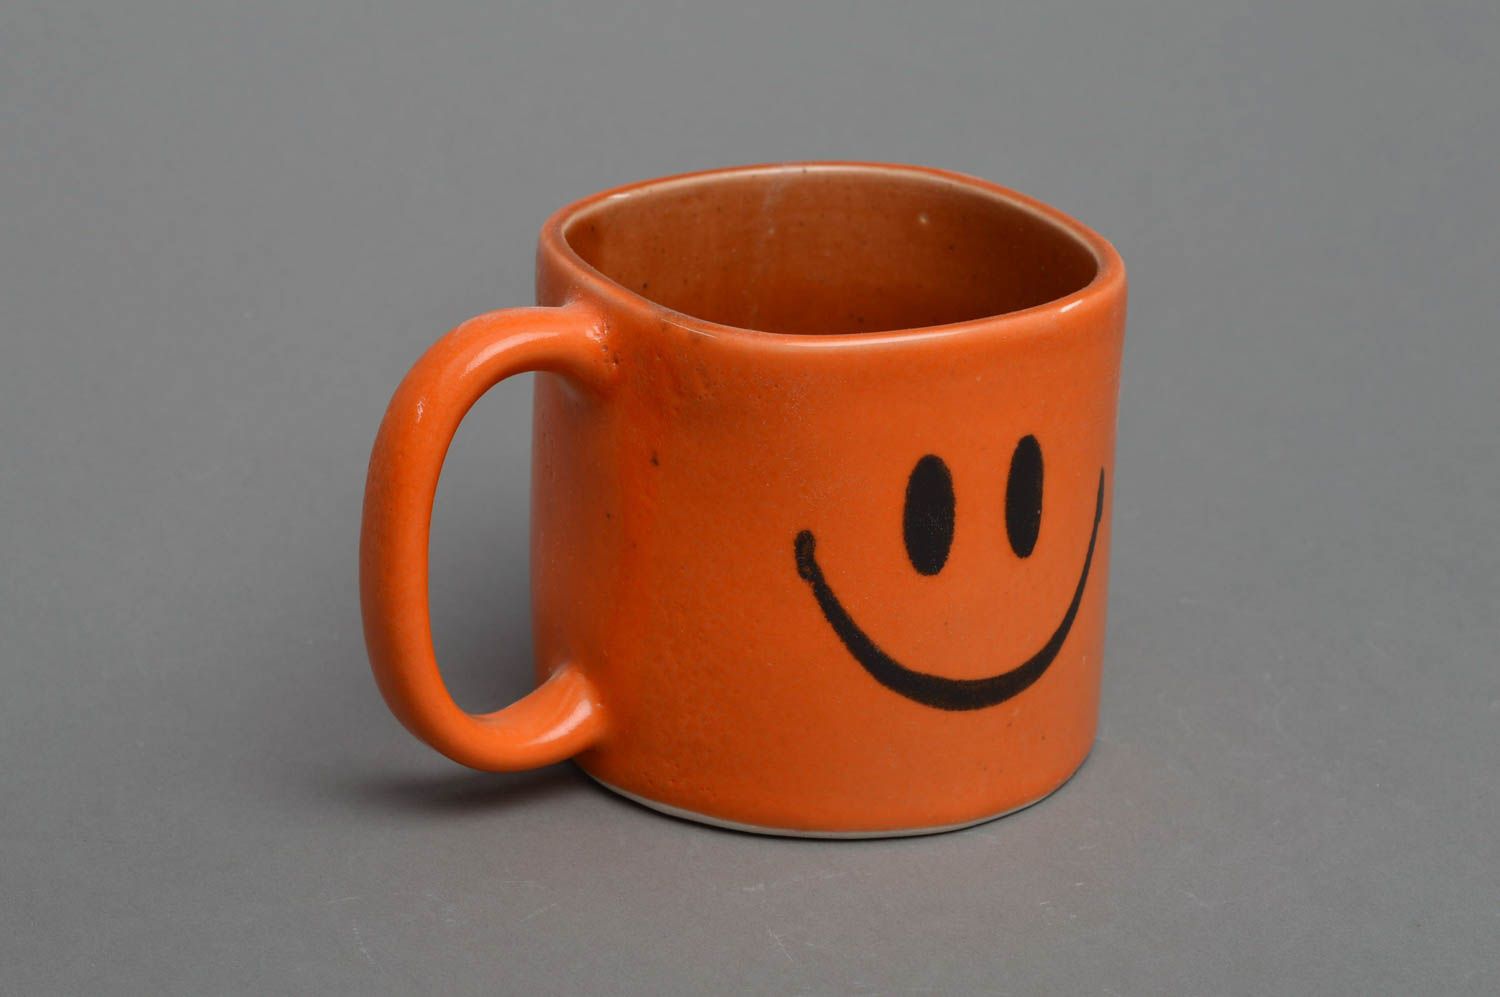 Tasse en porcelaine faite main orange avec smiley et inscription For Joy photo 2